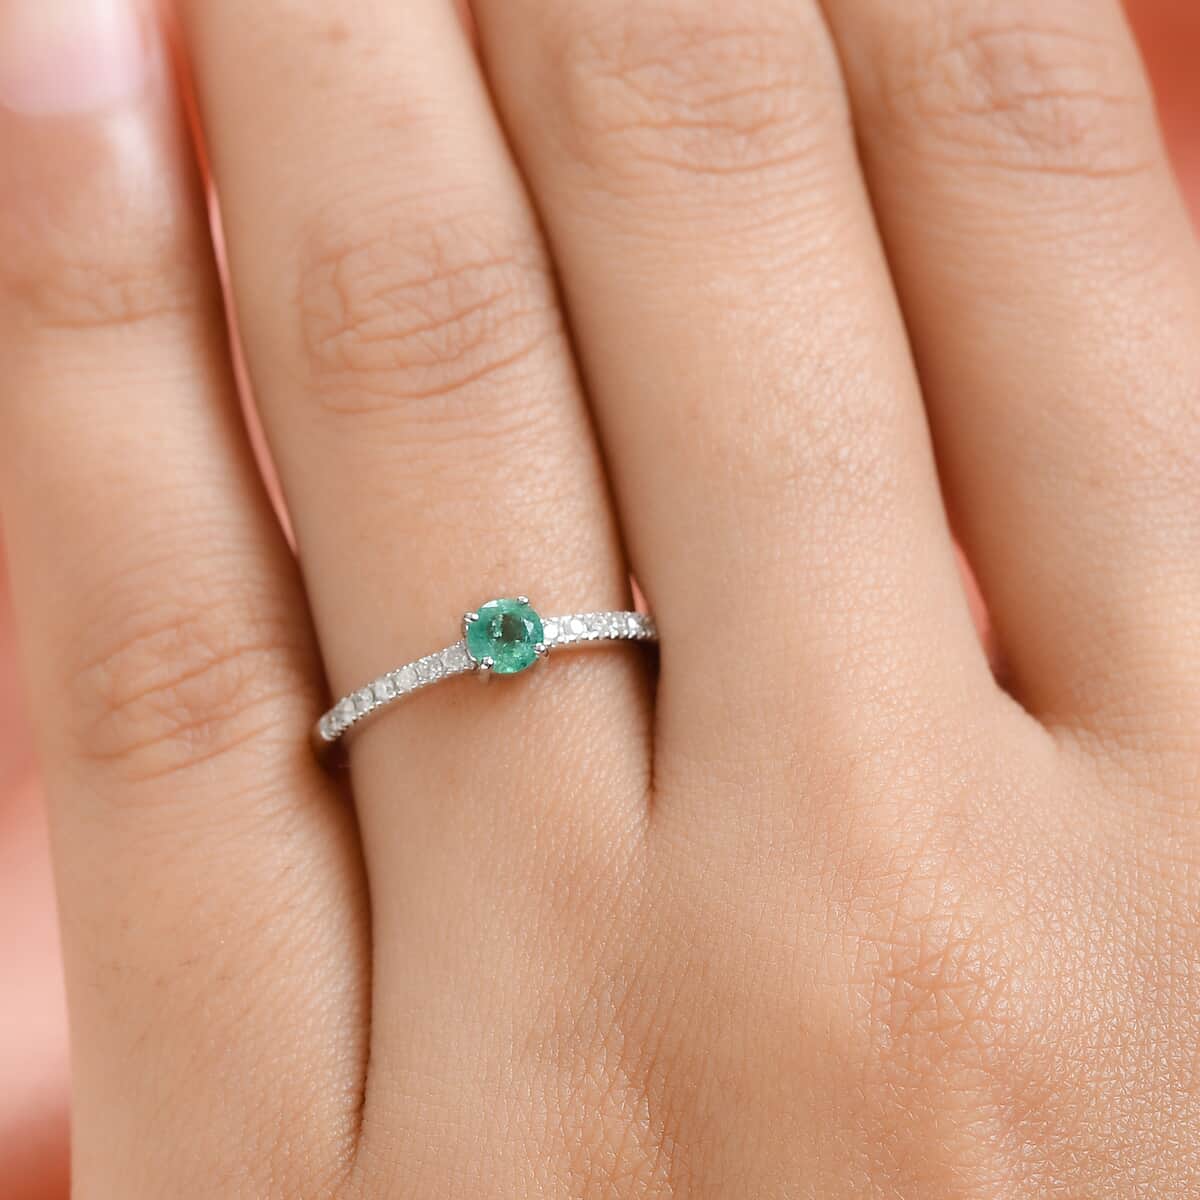 LUXORO 10K White Gold Premium Boyaca Colombian Emerald and Diamond Dainty Ring (Size 8.0) 0.35 ctw image number 2